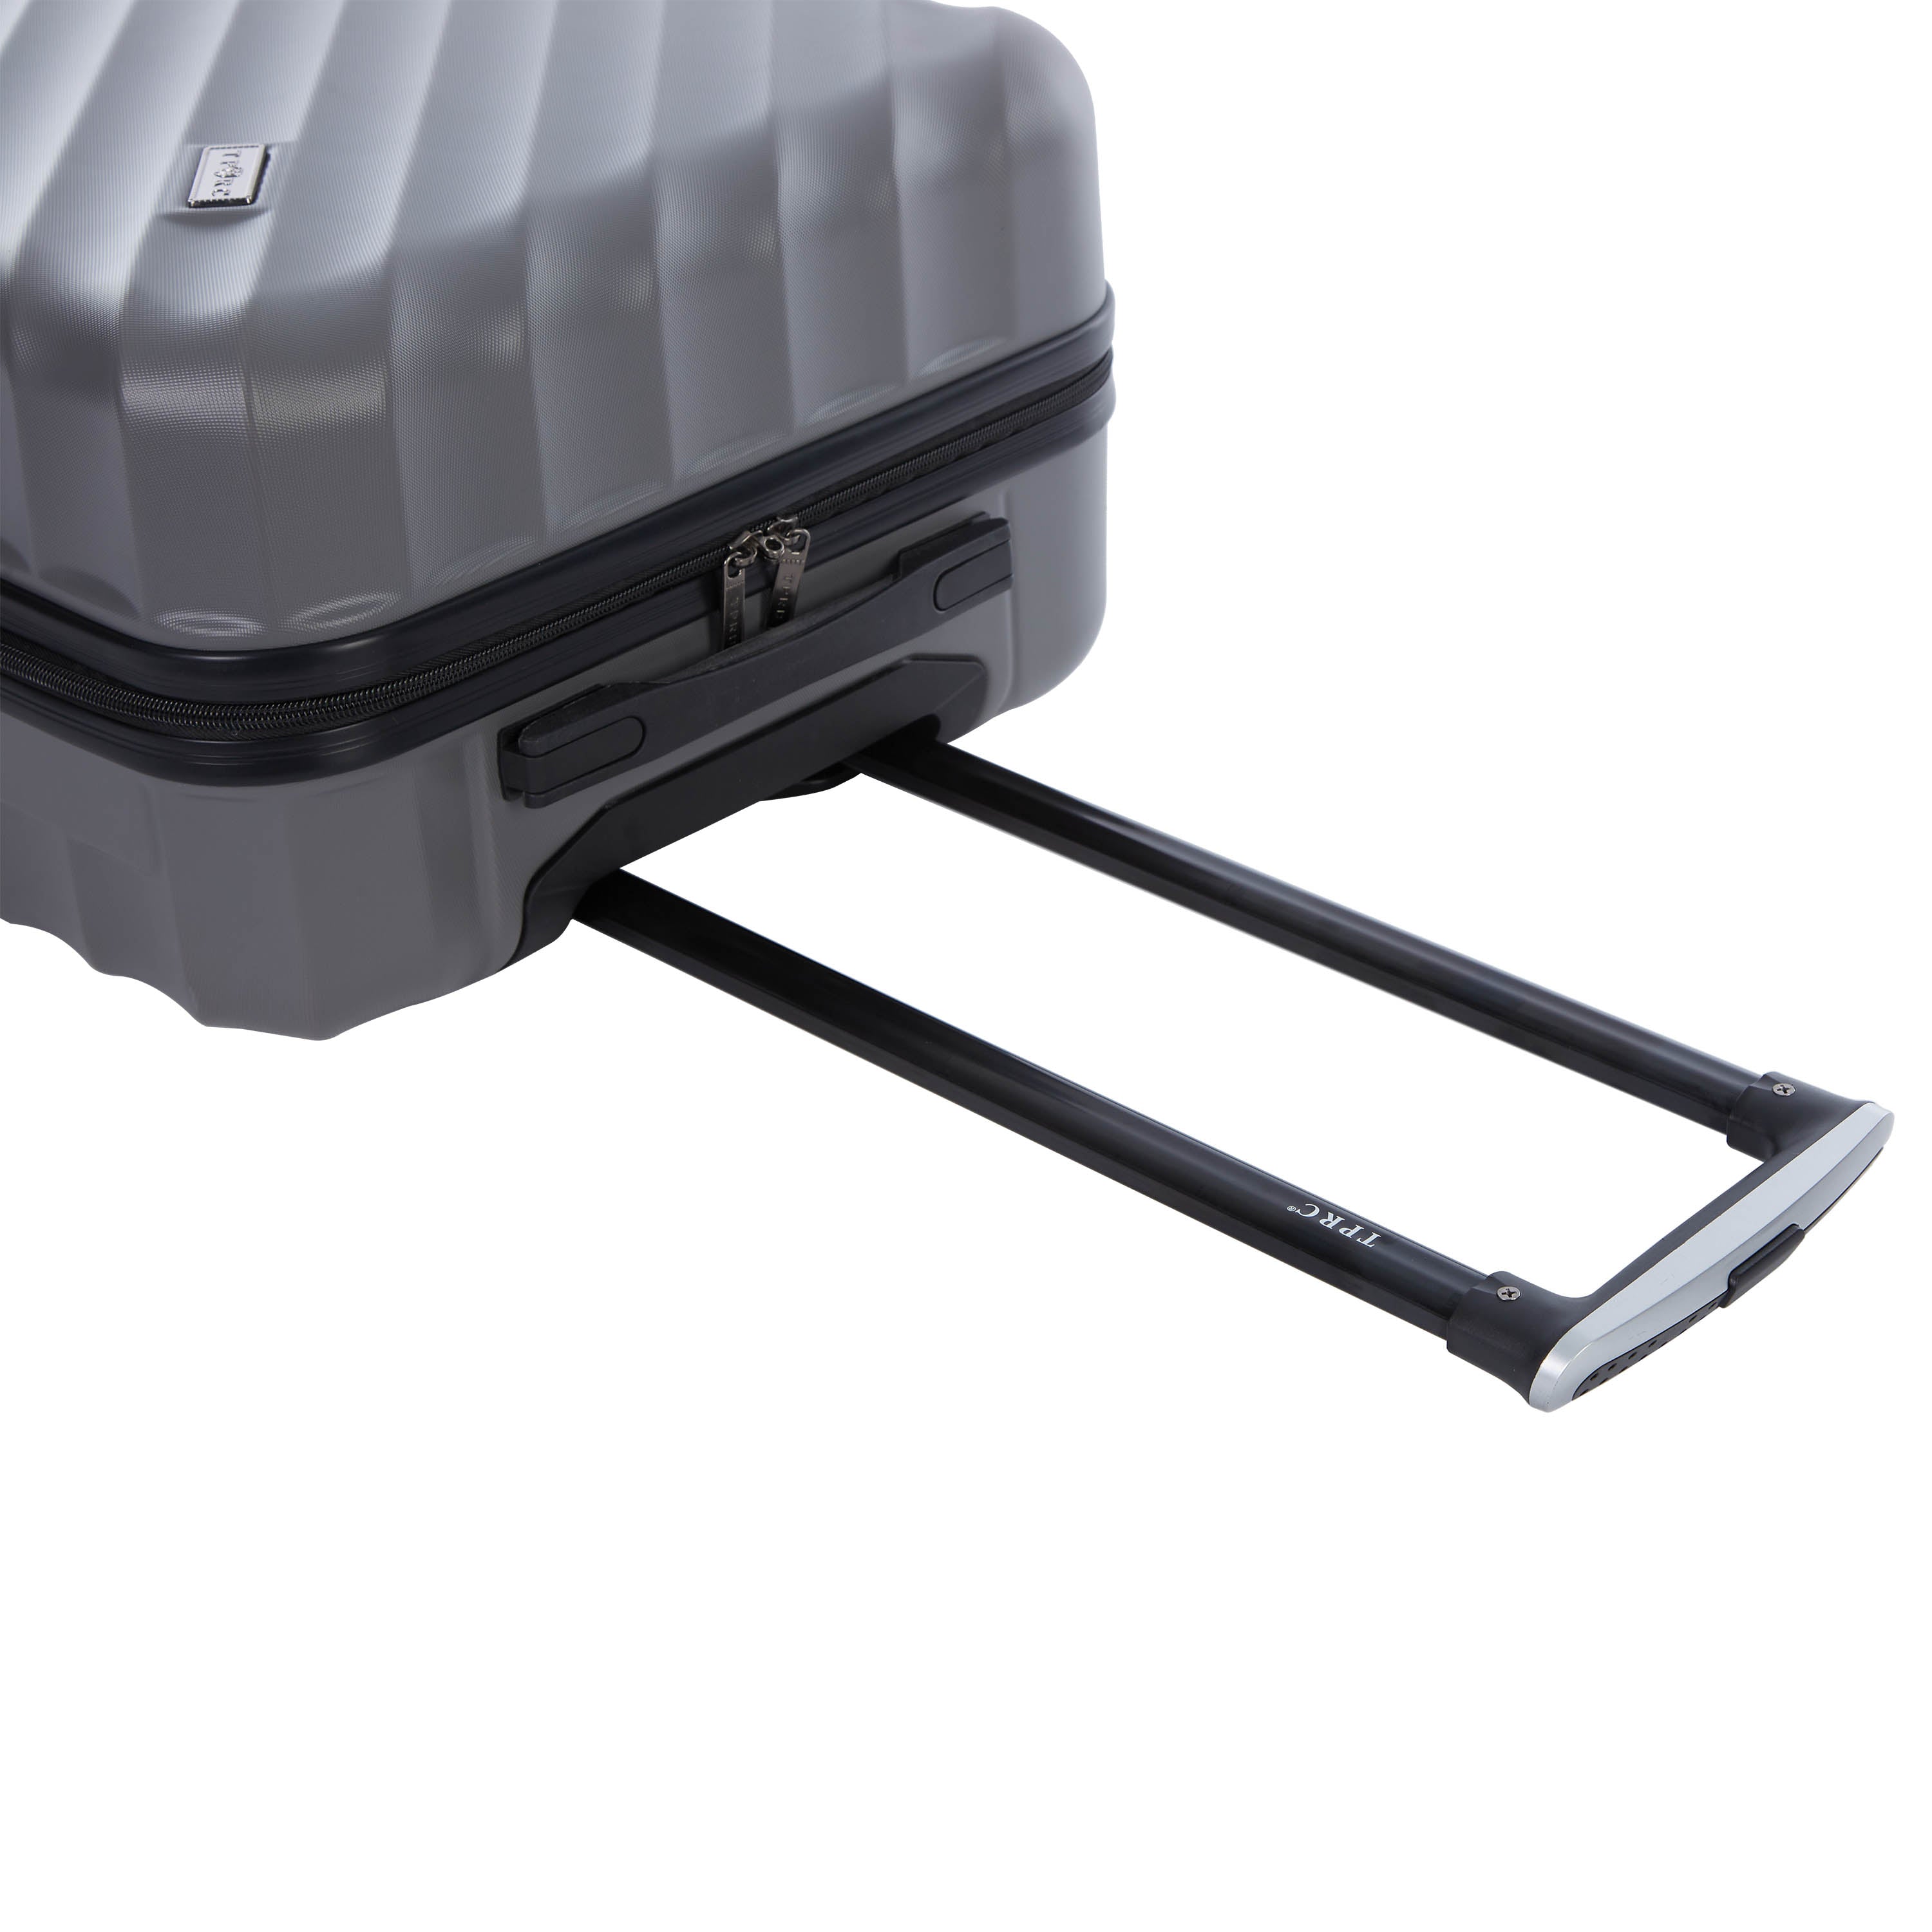 TPRC | Loola Collection | 3PCS Expandable Luggage Set W/ 4-Wheel System